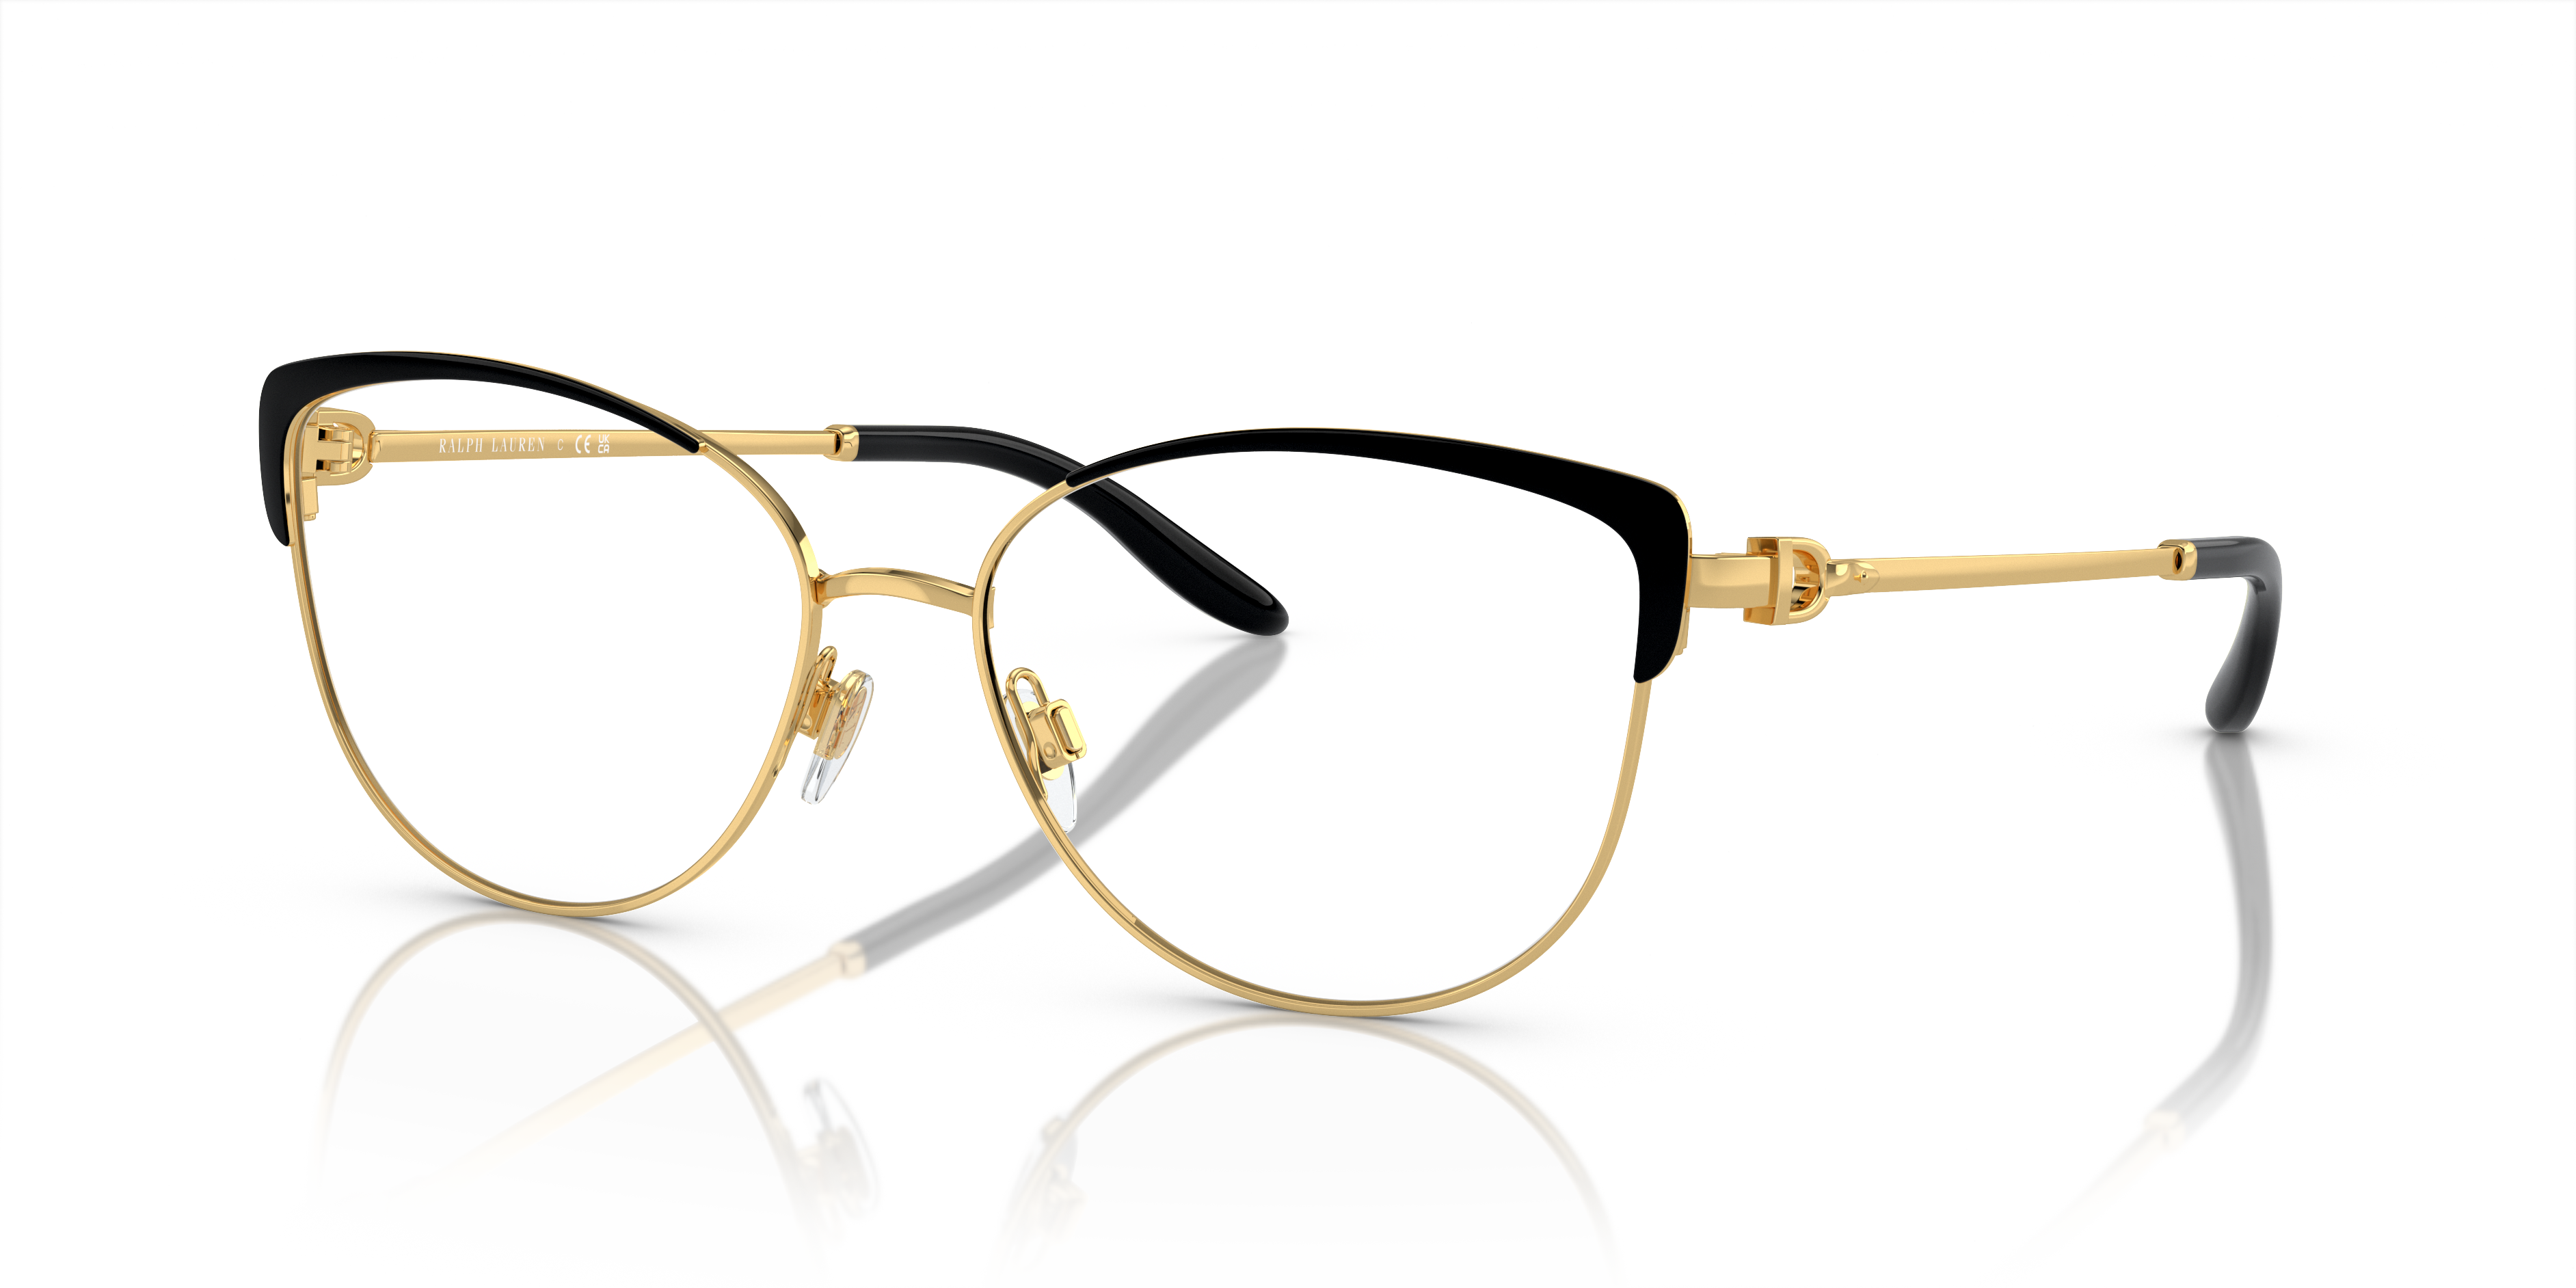 Angle_Left01 Ralph Lauren RL 5123 Glasses Transparent / Gold